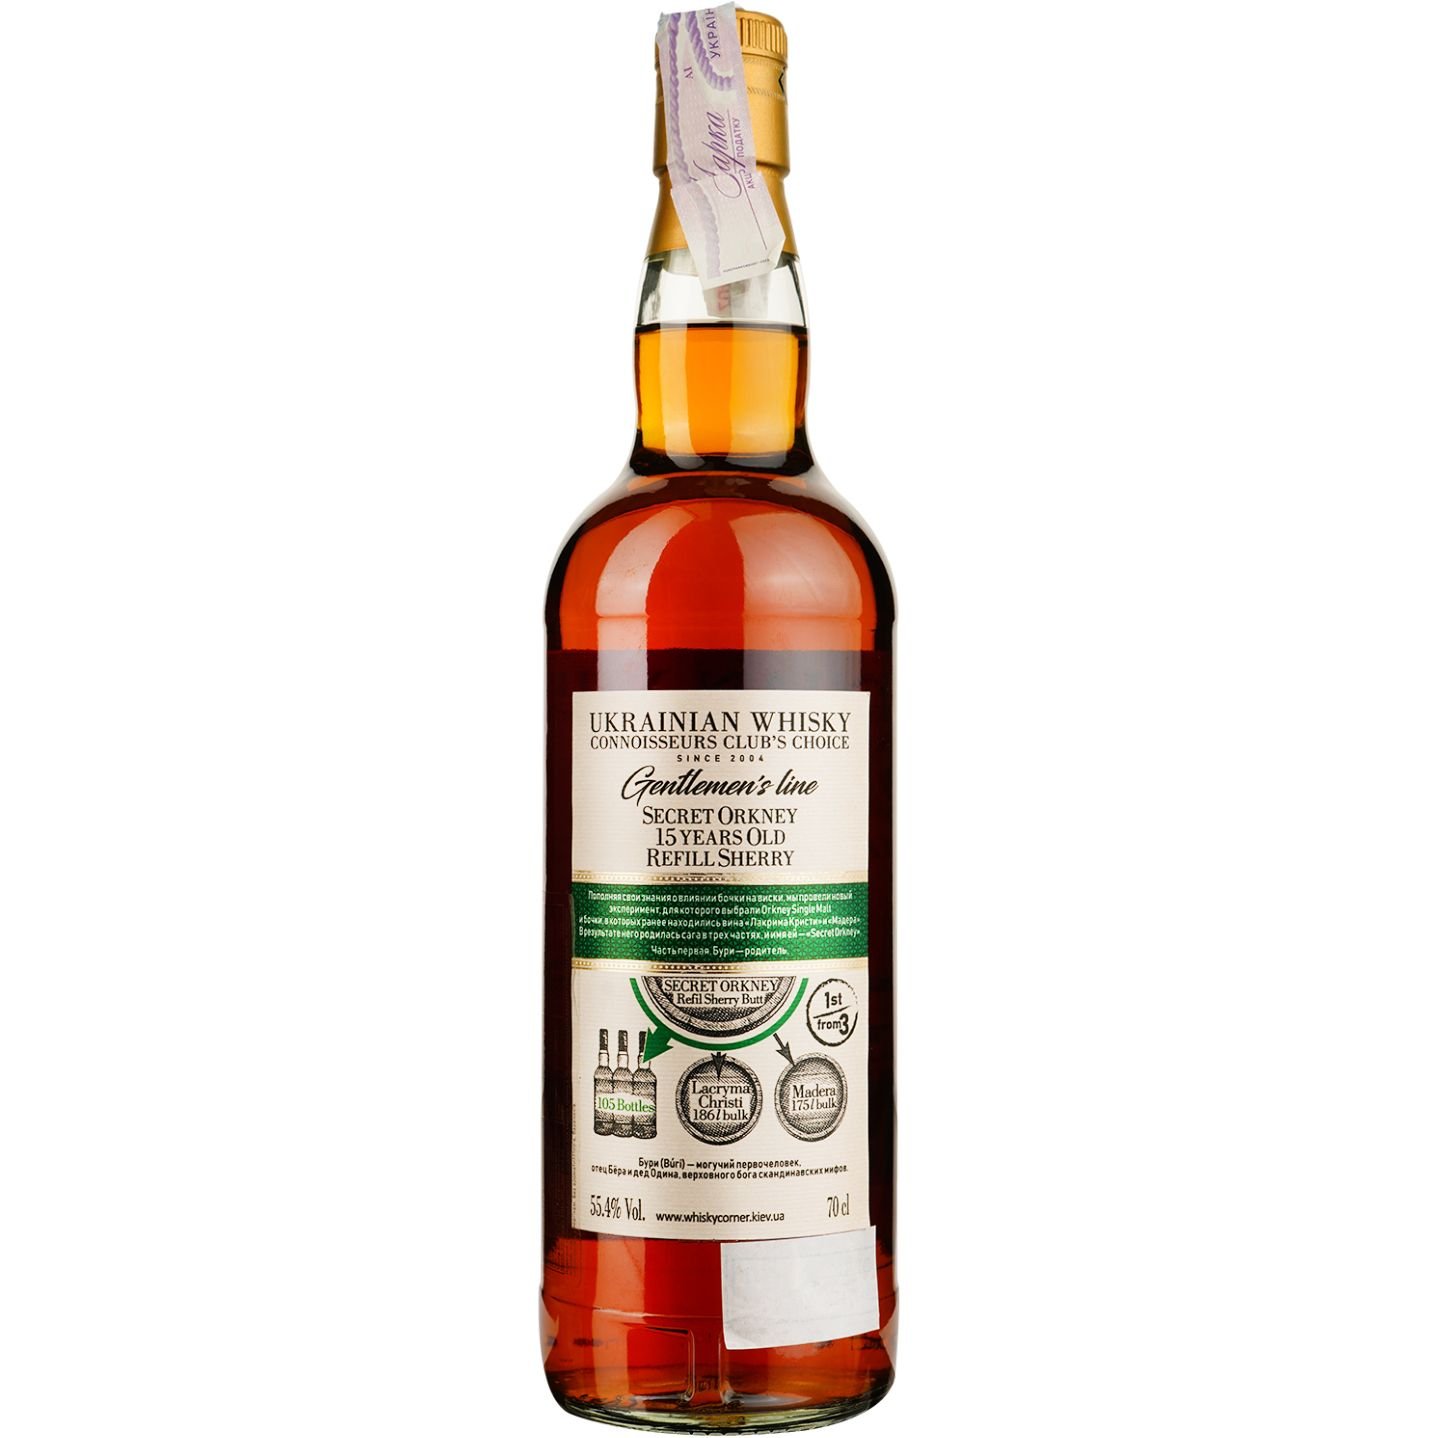 Виски Secret Orkney 15 Years Old Refill Sherry Single Malt Scotch Whisky, в подарочной упаковке, 55,4%, 0,7 л - фото 4